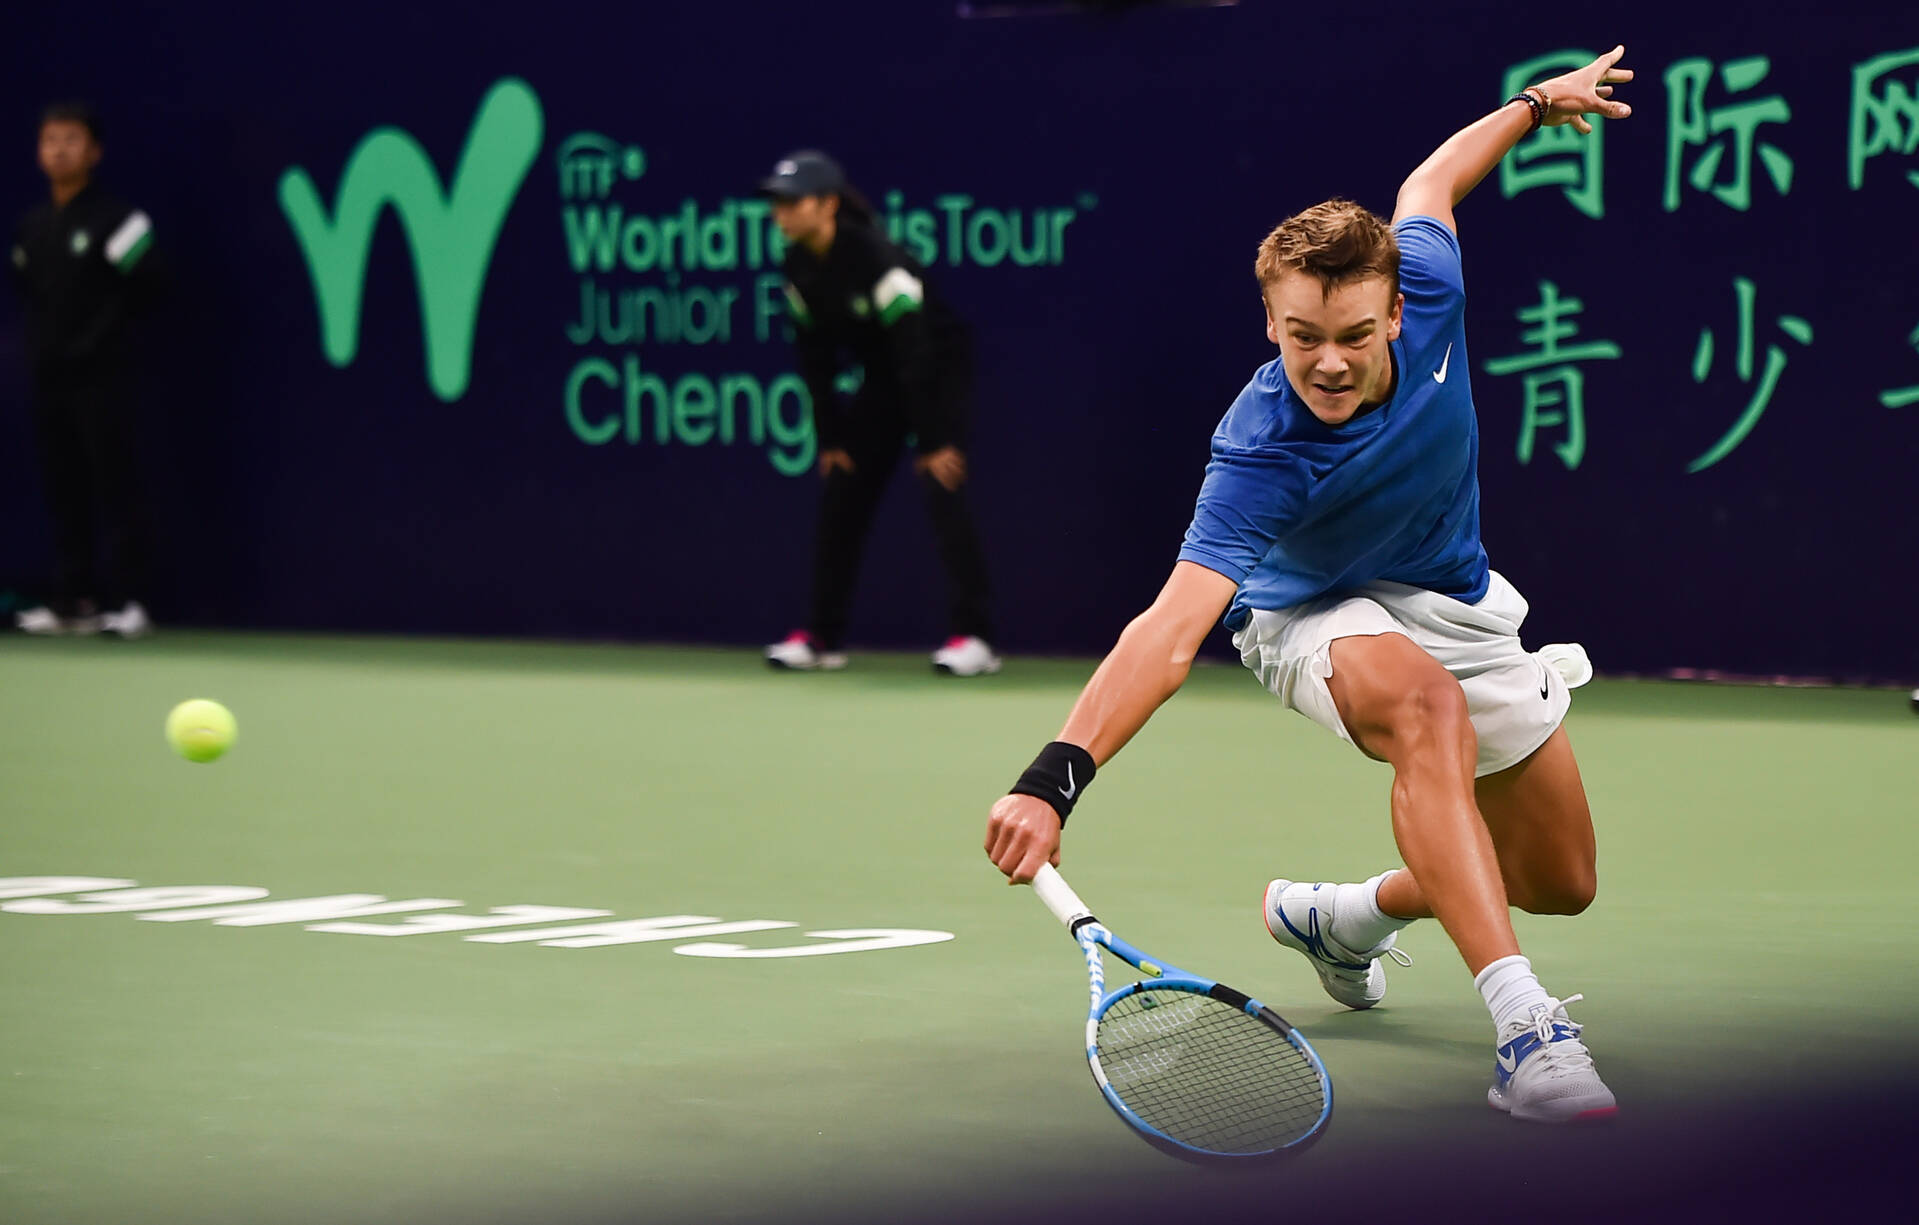 2023 ITF World Tennis Tour Junior Finals to return to Chengdu